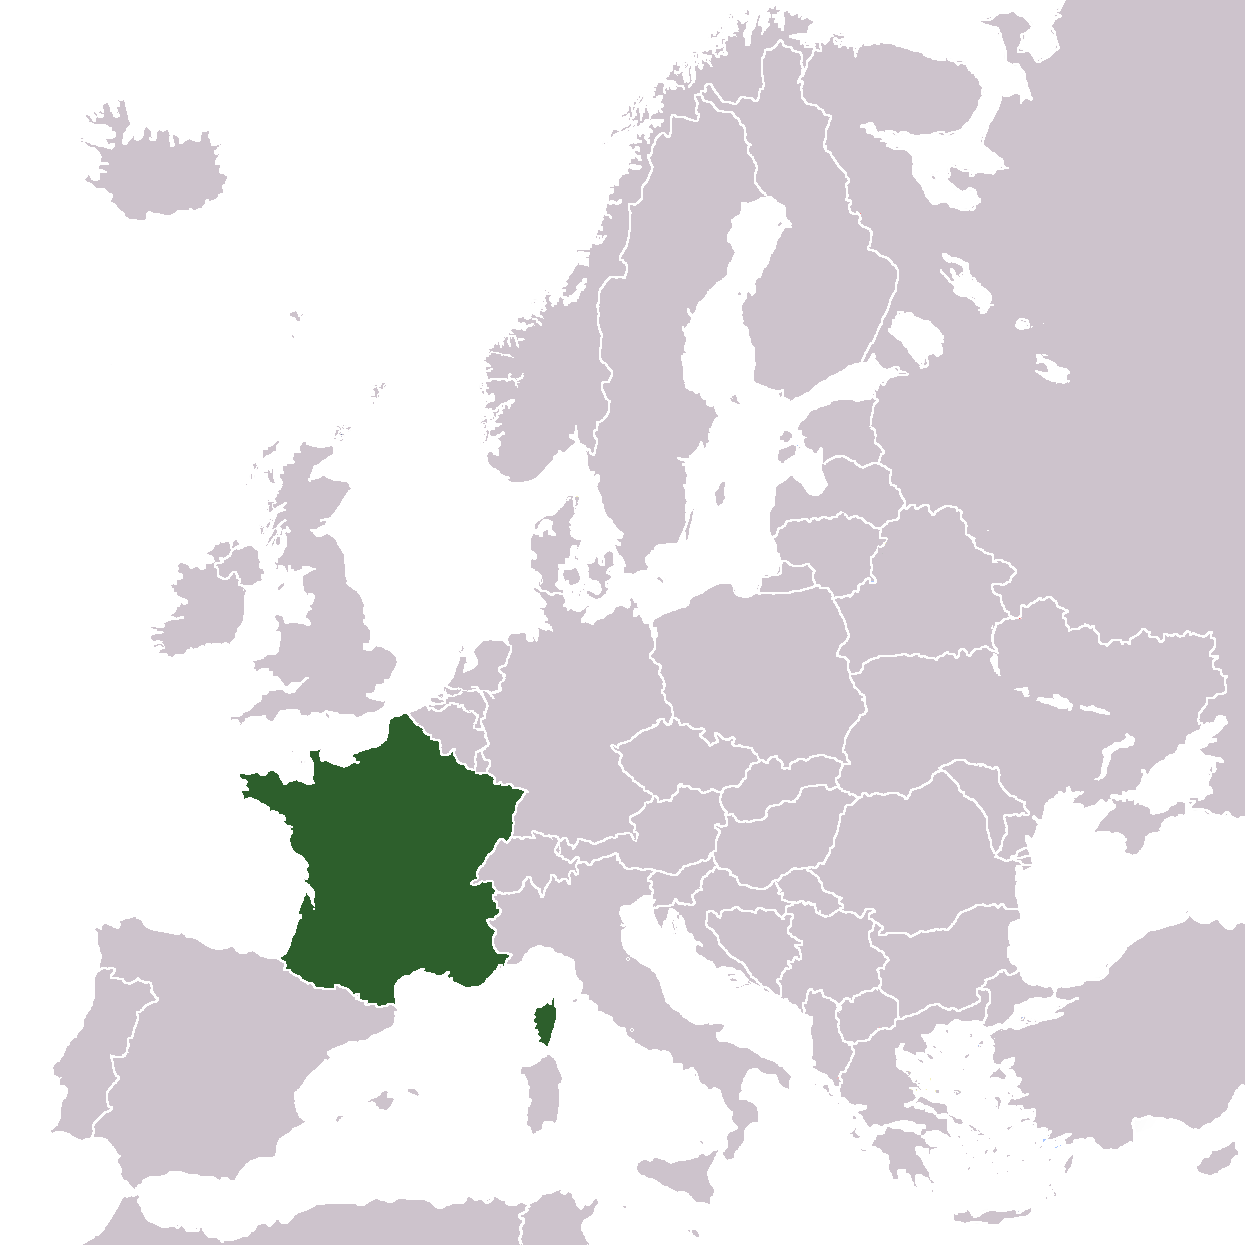 Europe Location France - MapSof.net